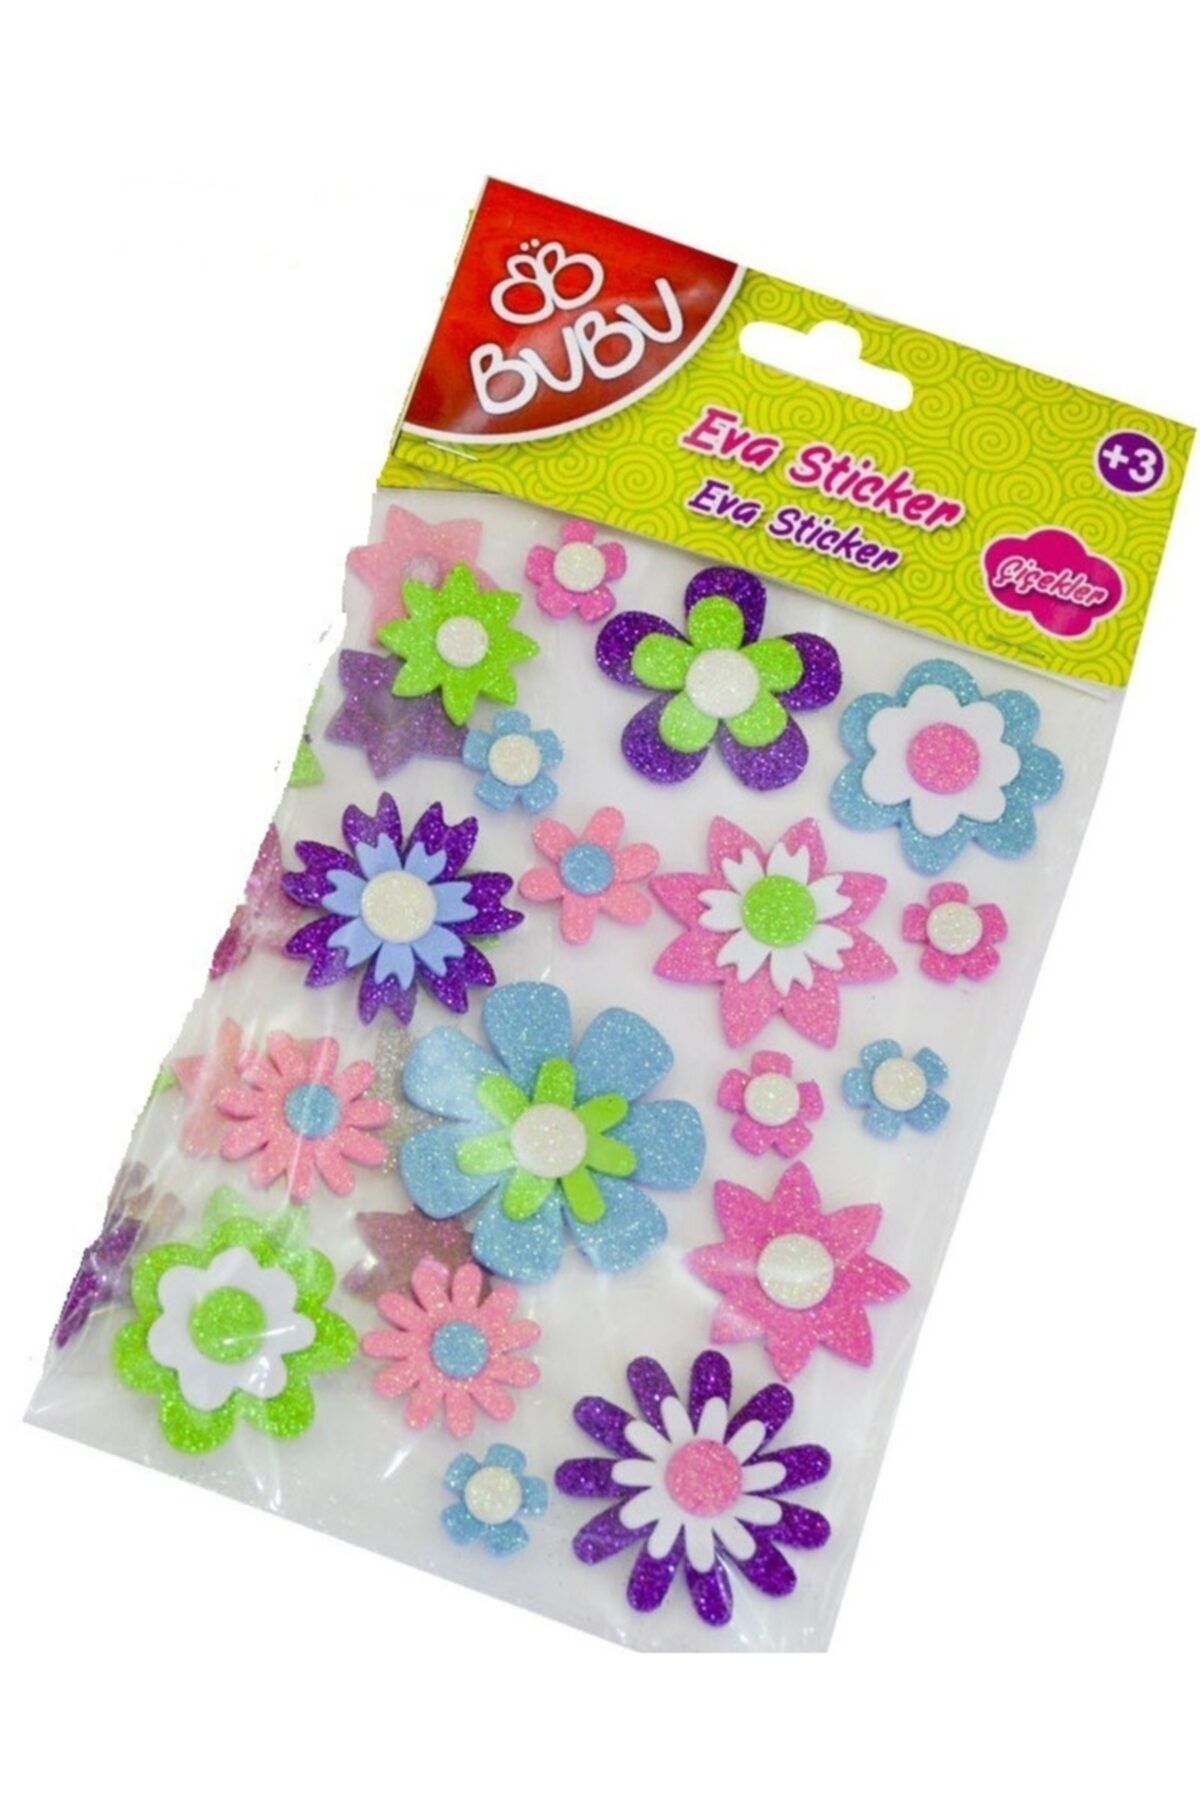 Bubu Bu-bu Simli Eva Sticker Çiçekler Sts021(st0080)